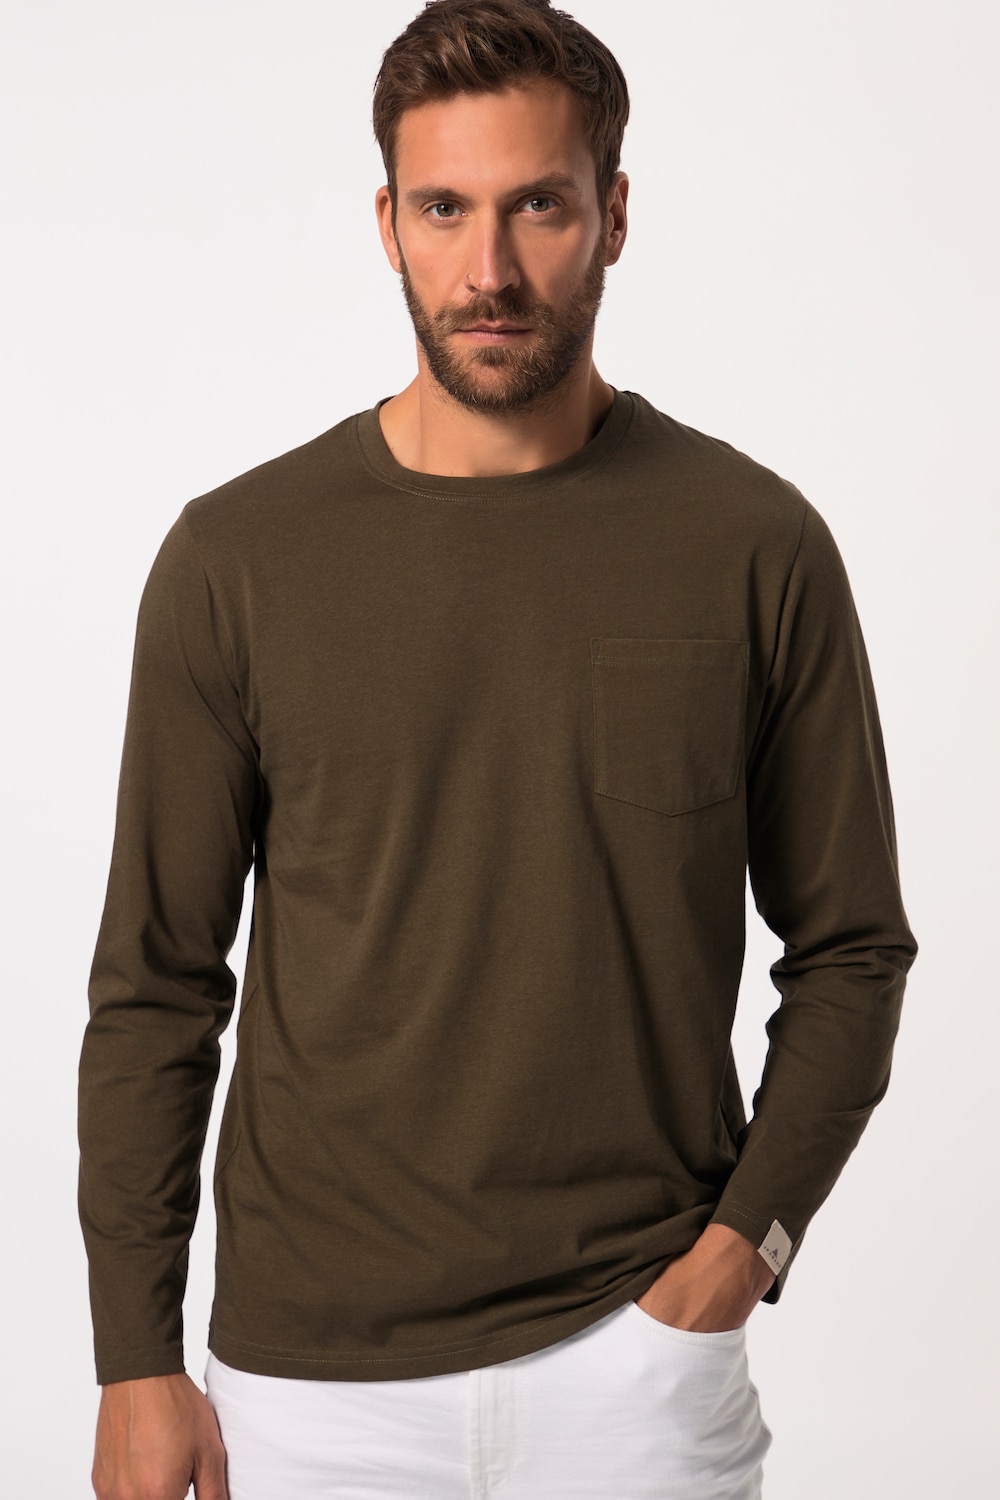 Grote Maten JP AWARE shirt met lange mouwen, Heren, bruin, Maat: L, Katoen/Polyester, JP-Aware